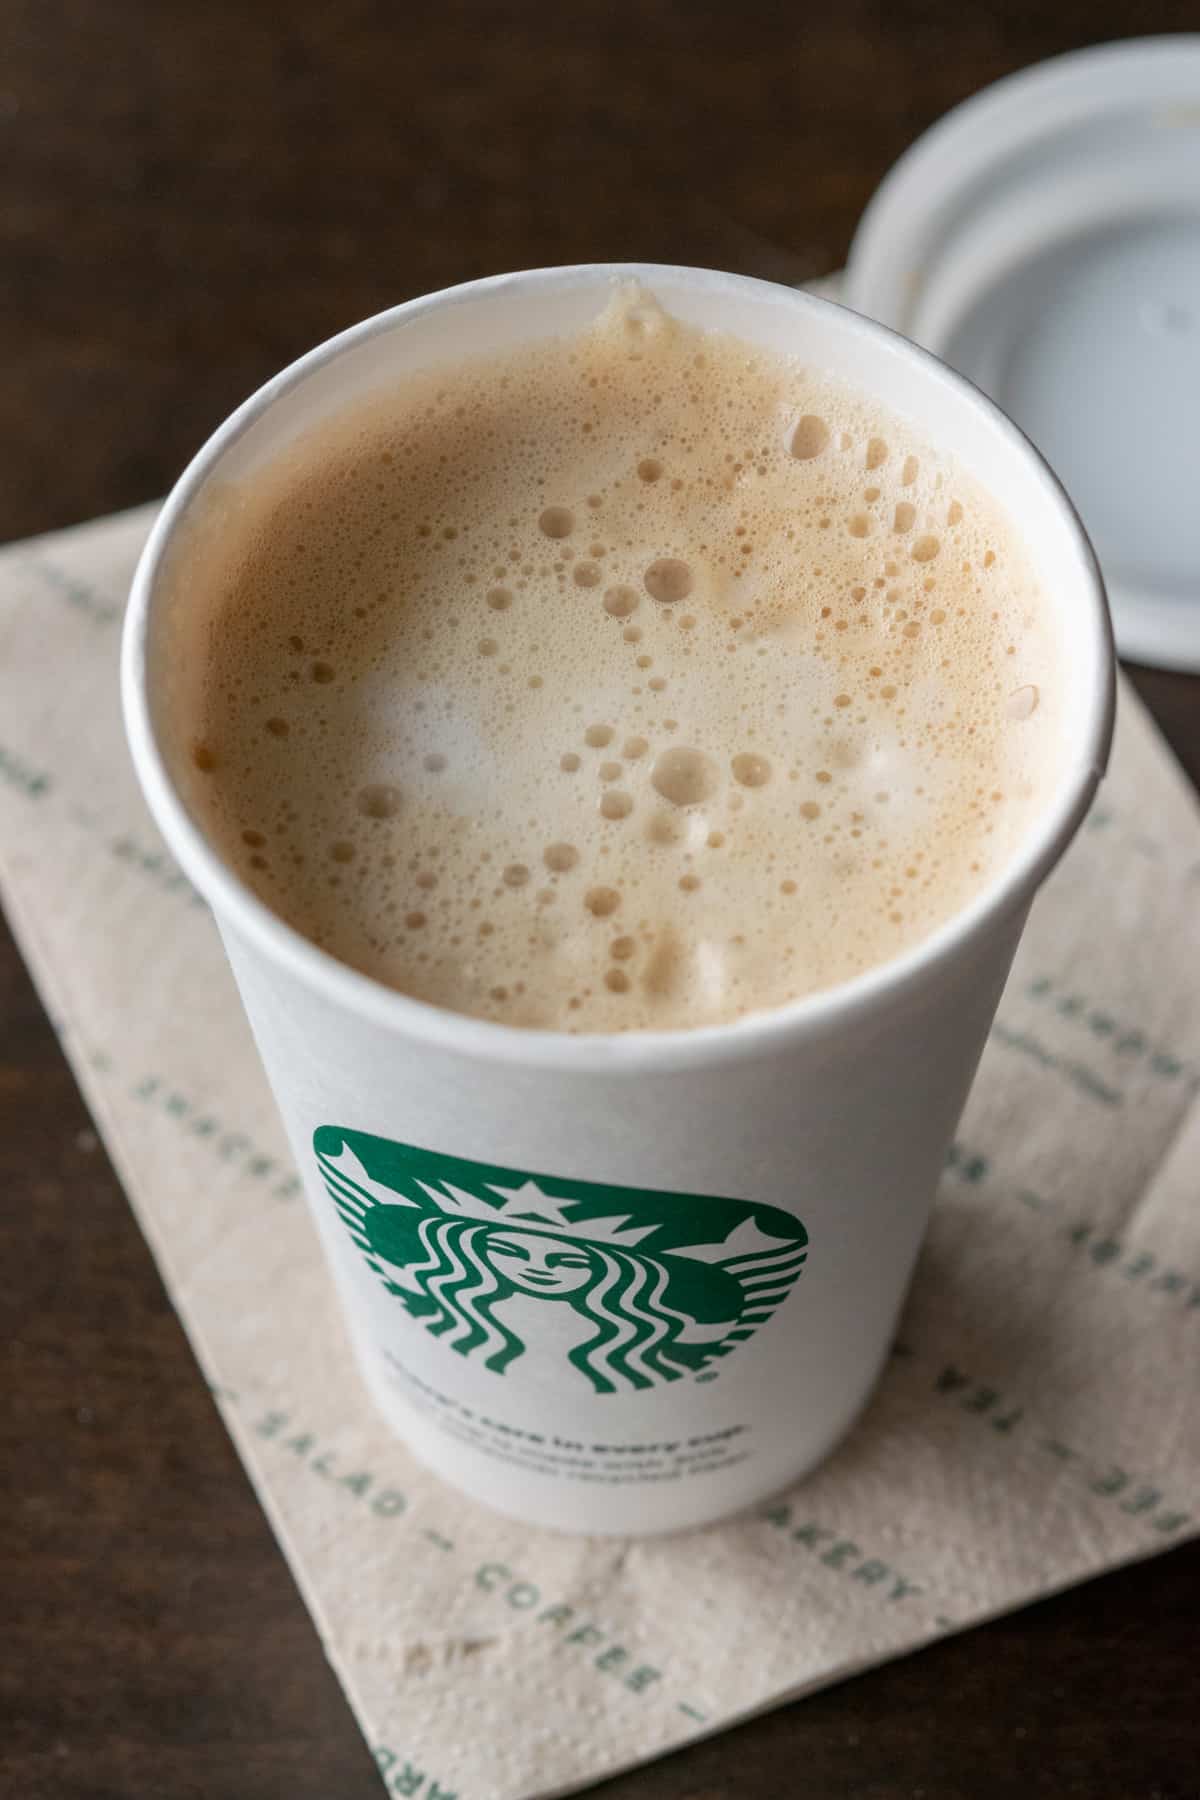 Starbucks Almond Milk Nutrition The Healthiest Milk Revealed » Grounds